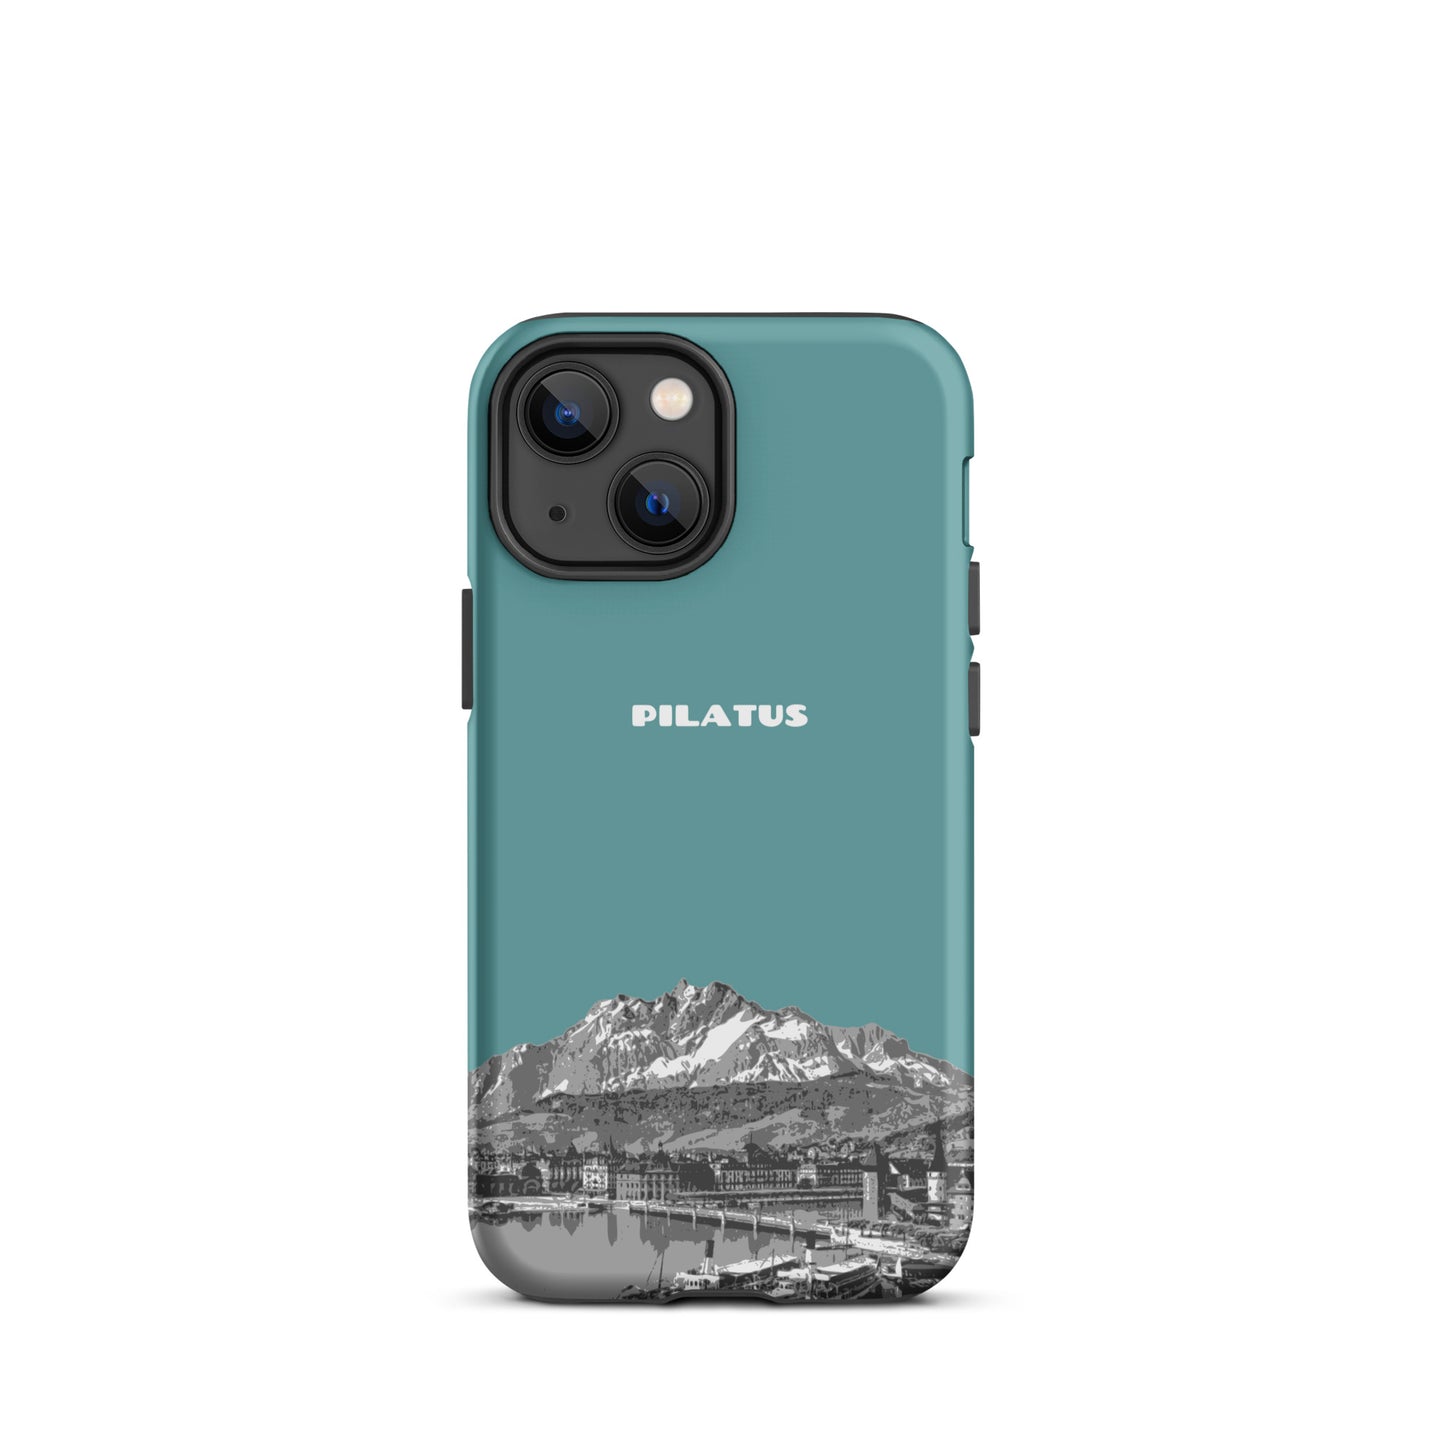 iPhone Case - Pilatus - Kadettenblau